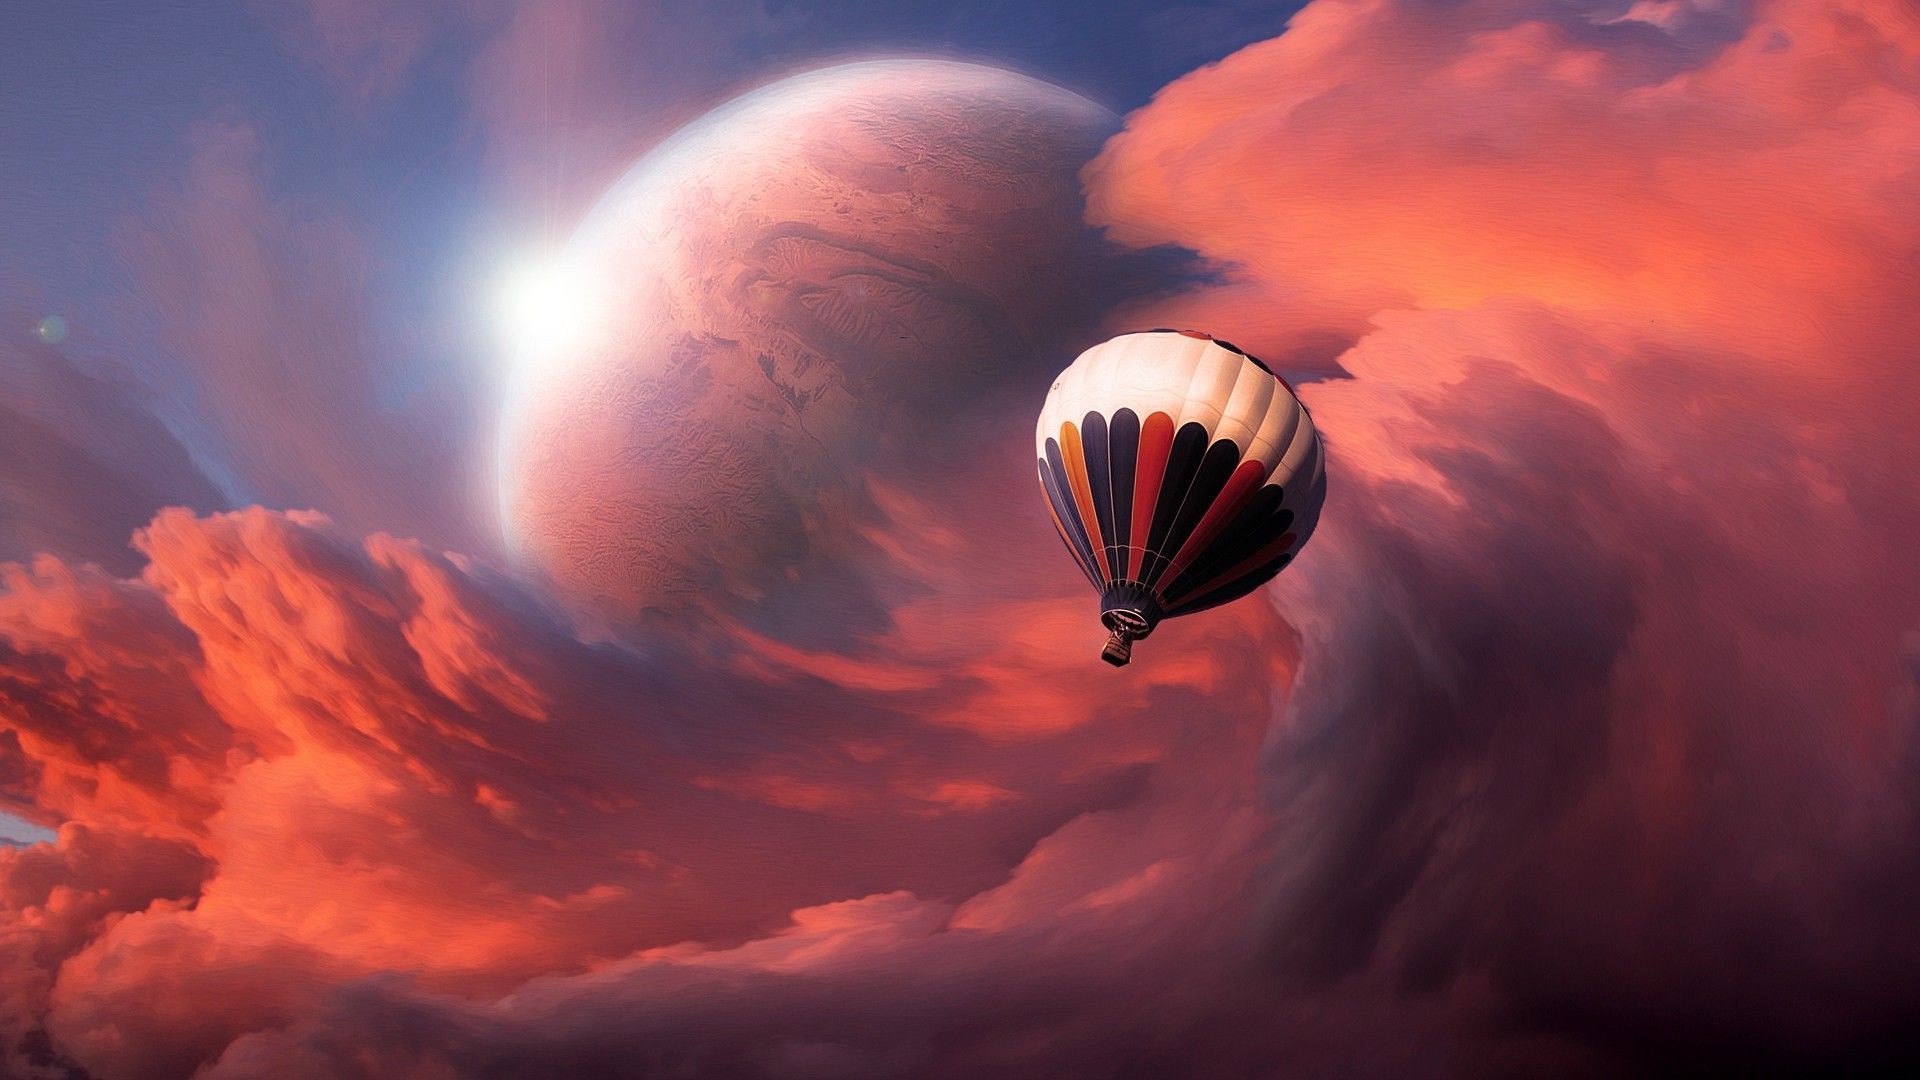 artwork, Fantasy Art, Hot Air Balloons, Clouds, Flying, Colorful, Planet Wallpaper